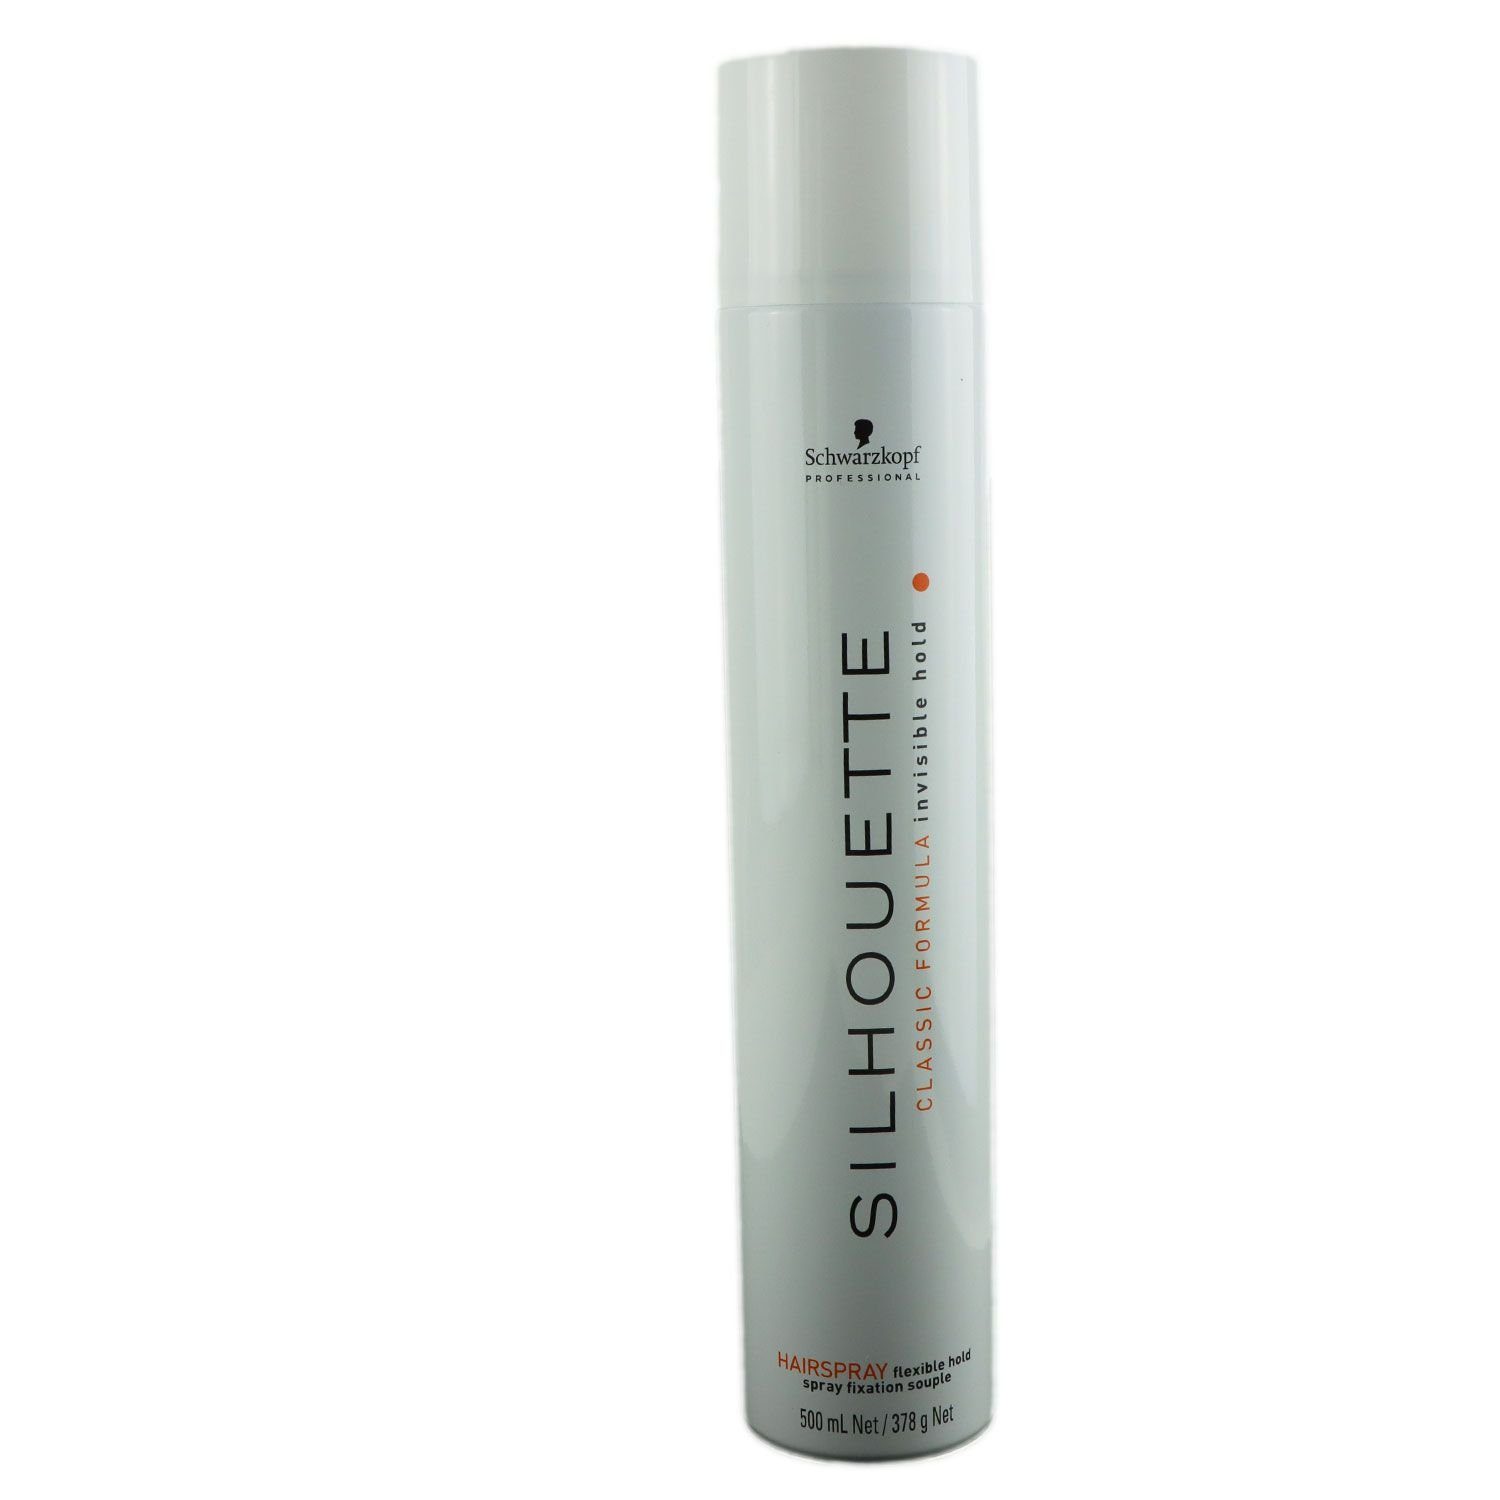 Schwarzkopf Haarspray Silhouette Flexible Haarspray 500 ml